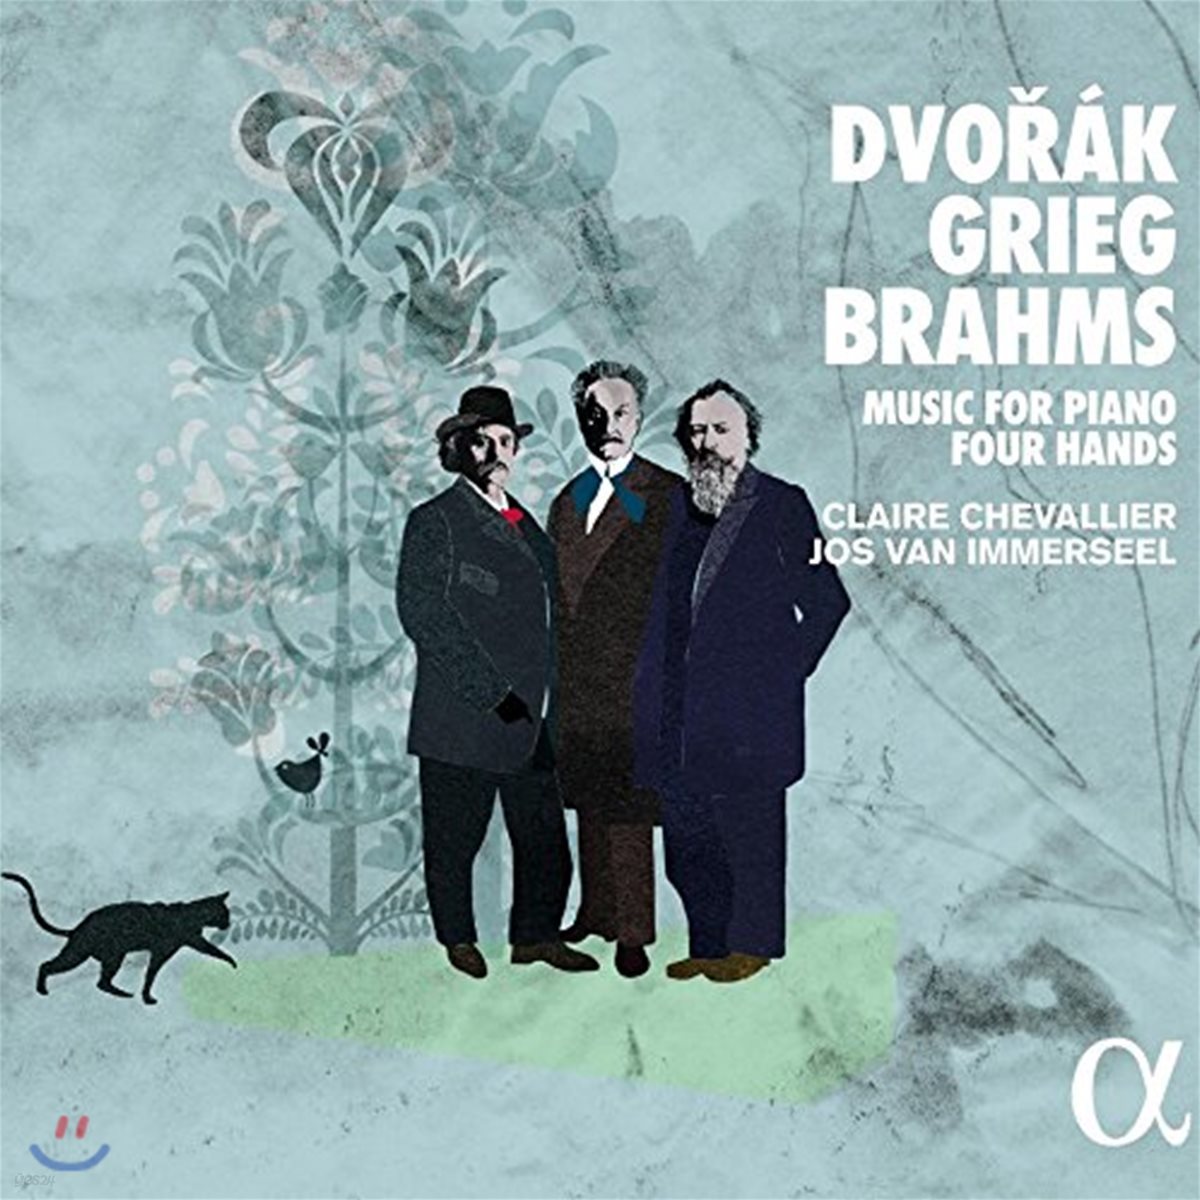 Jos van Immerseel / Claire Chevallier 드보르작 / 그리그 / 브람스: 네 손을 위한 피아노 작품집 - 클레르 슈발리에, 요스 반 임머질 (Dvorak / Grieg / Brahms: Music for Piano Four Hands)